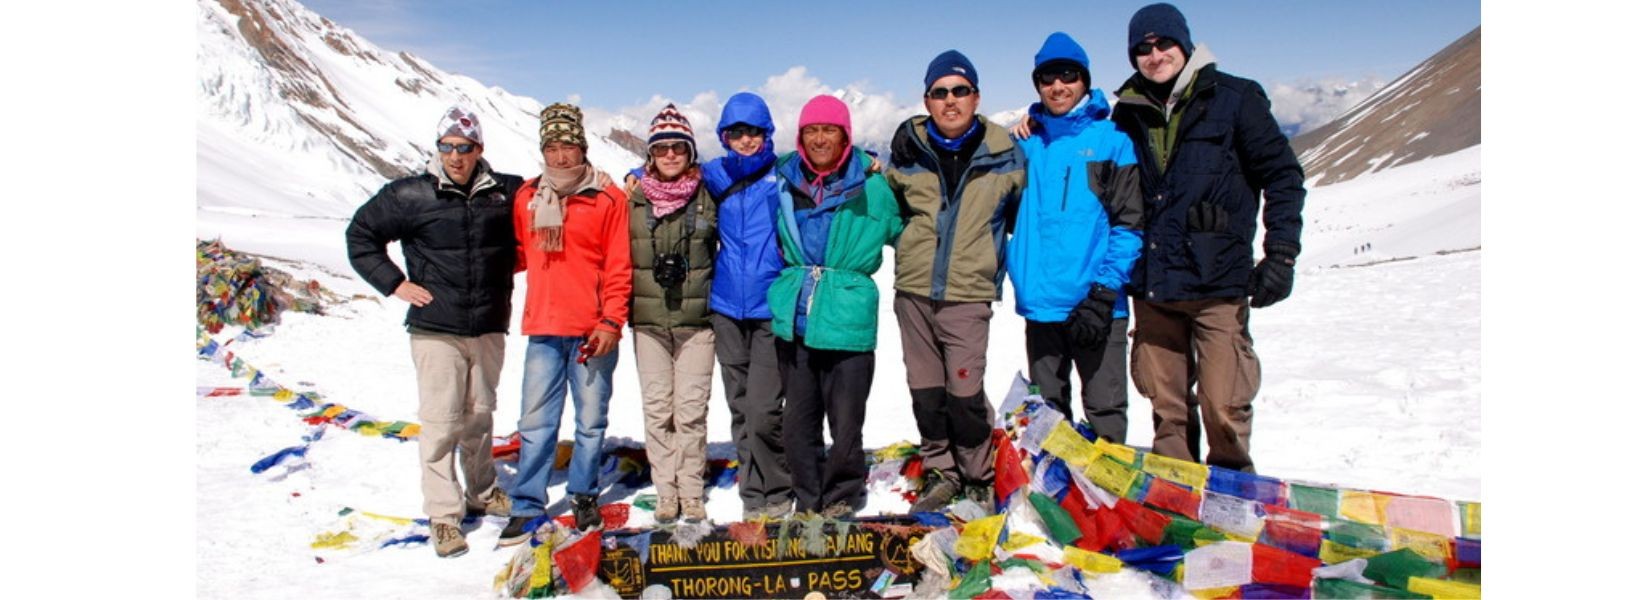 Annapurna Circuit Trek -11 days